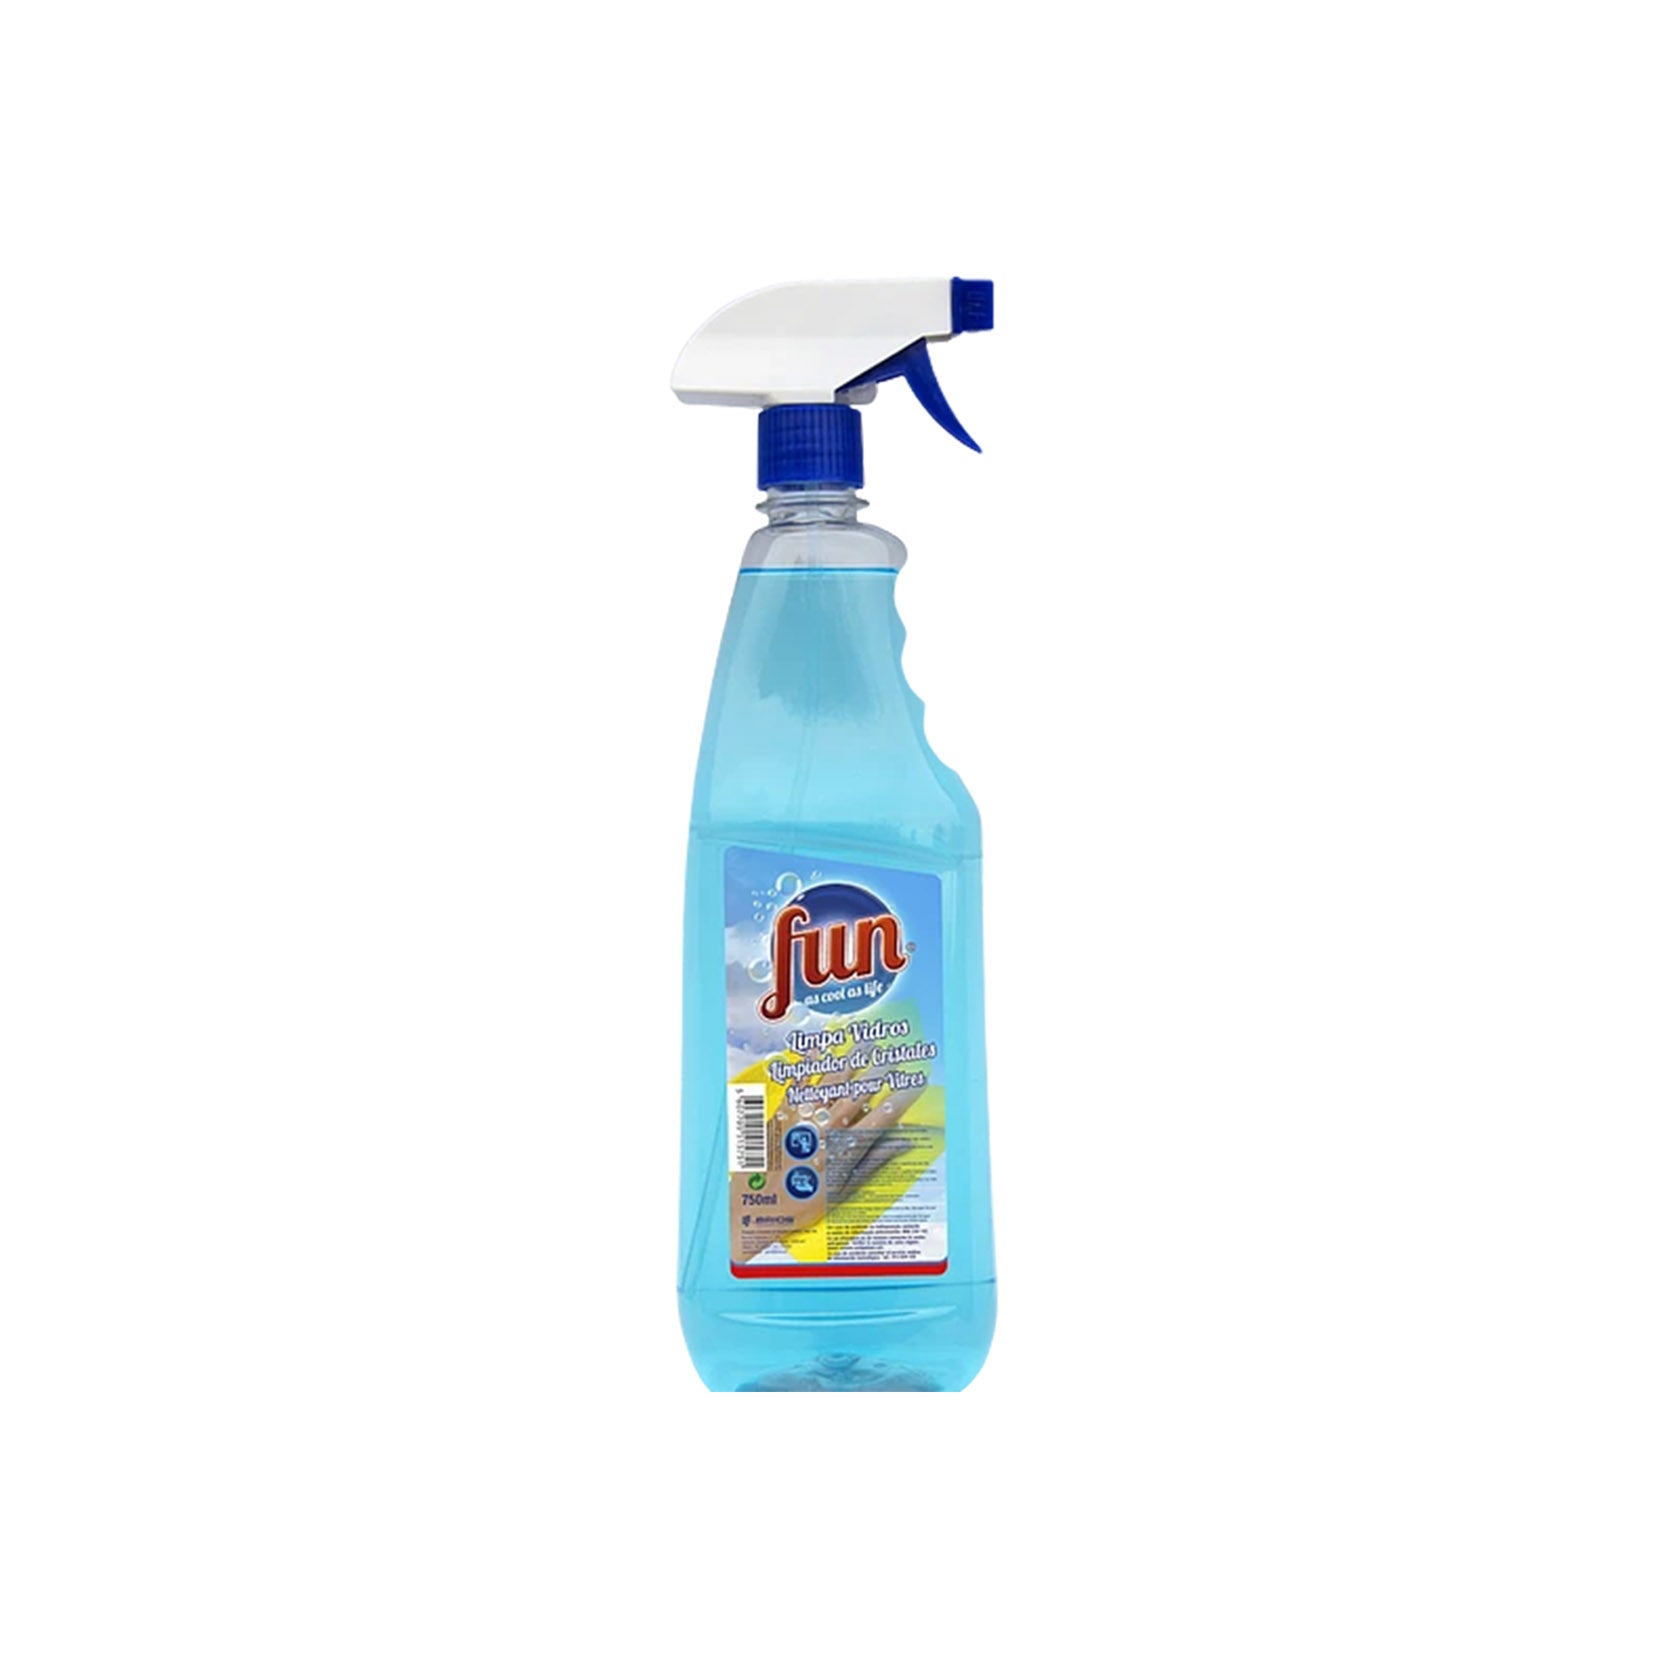 Fun Limpa-Vidros Spray 750 ml